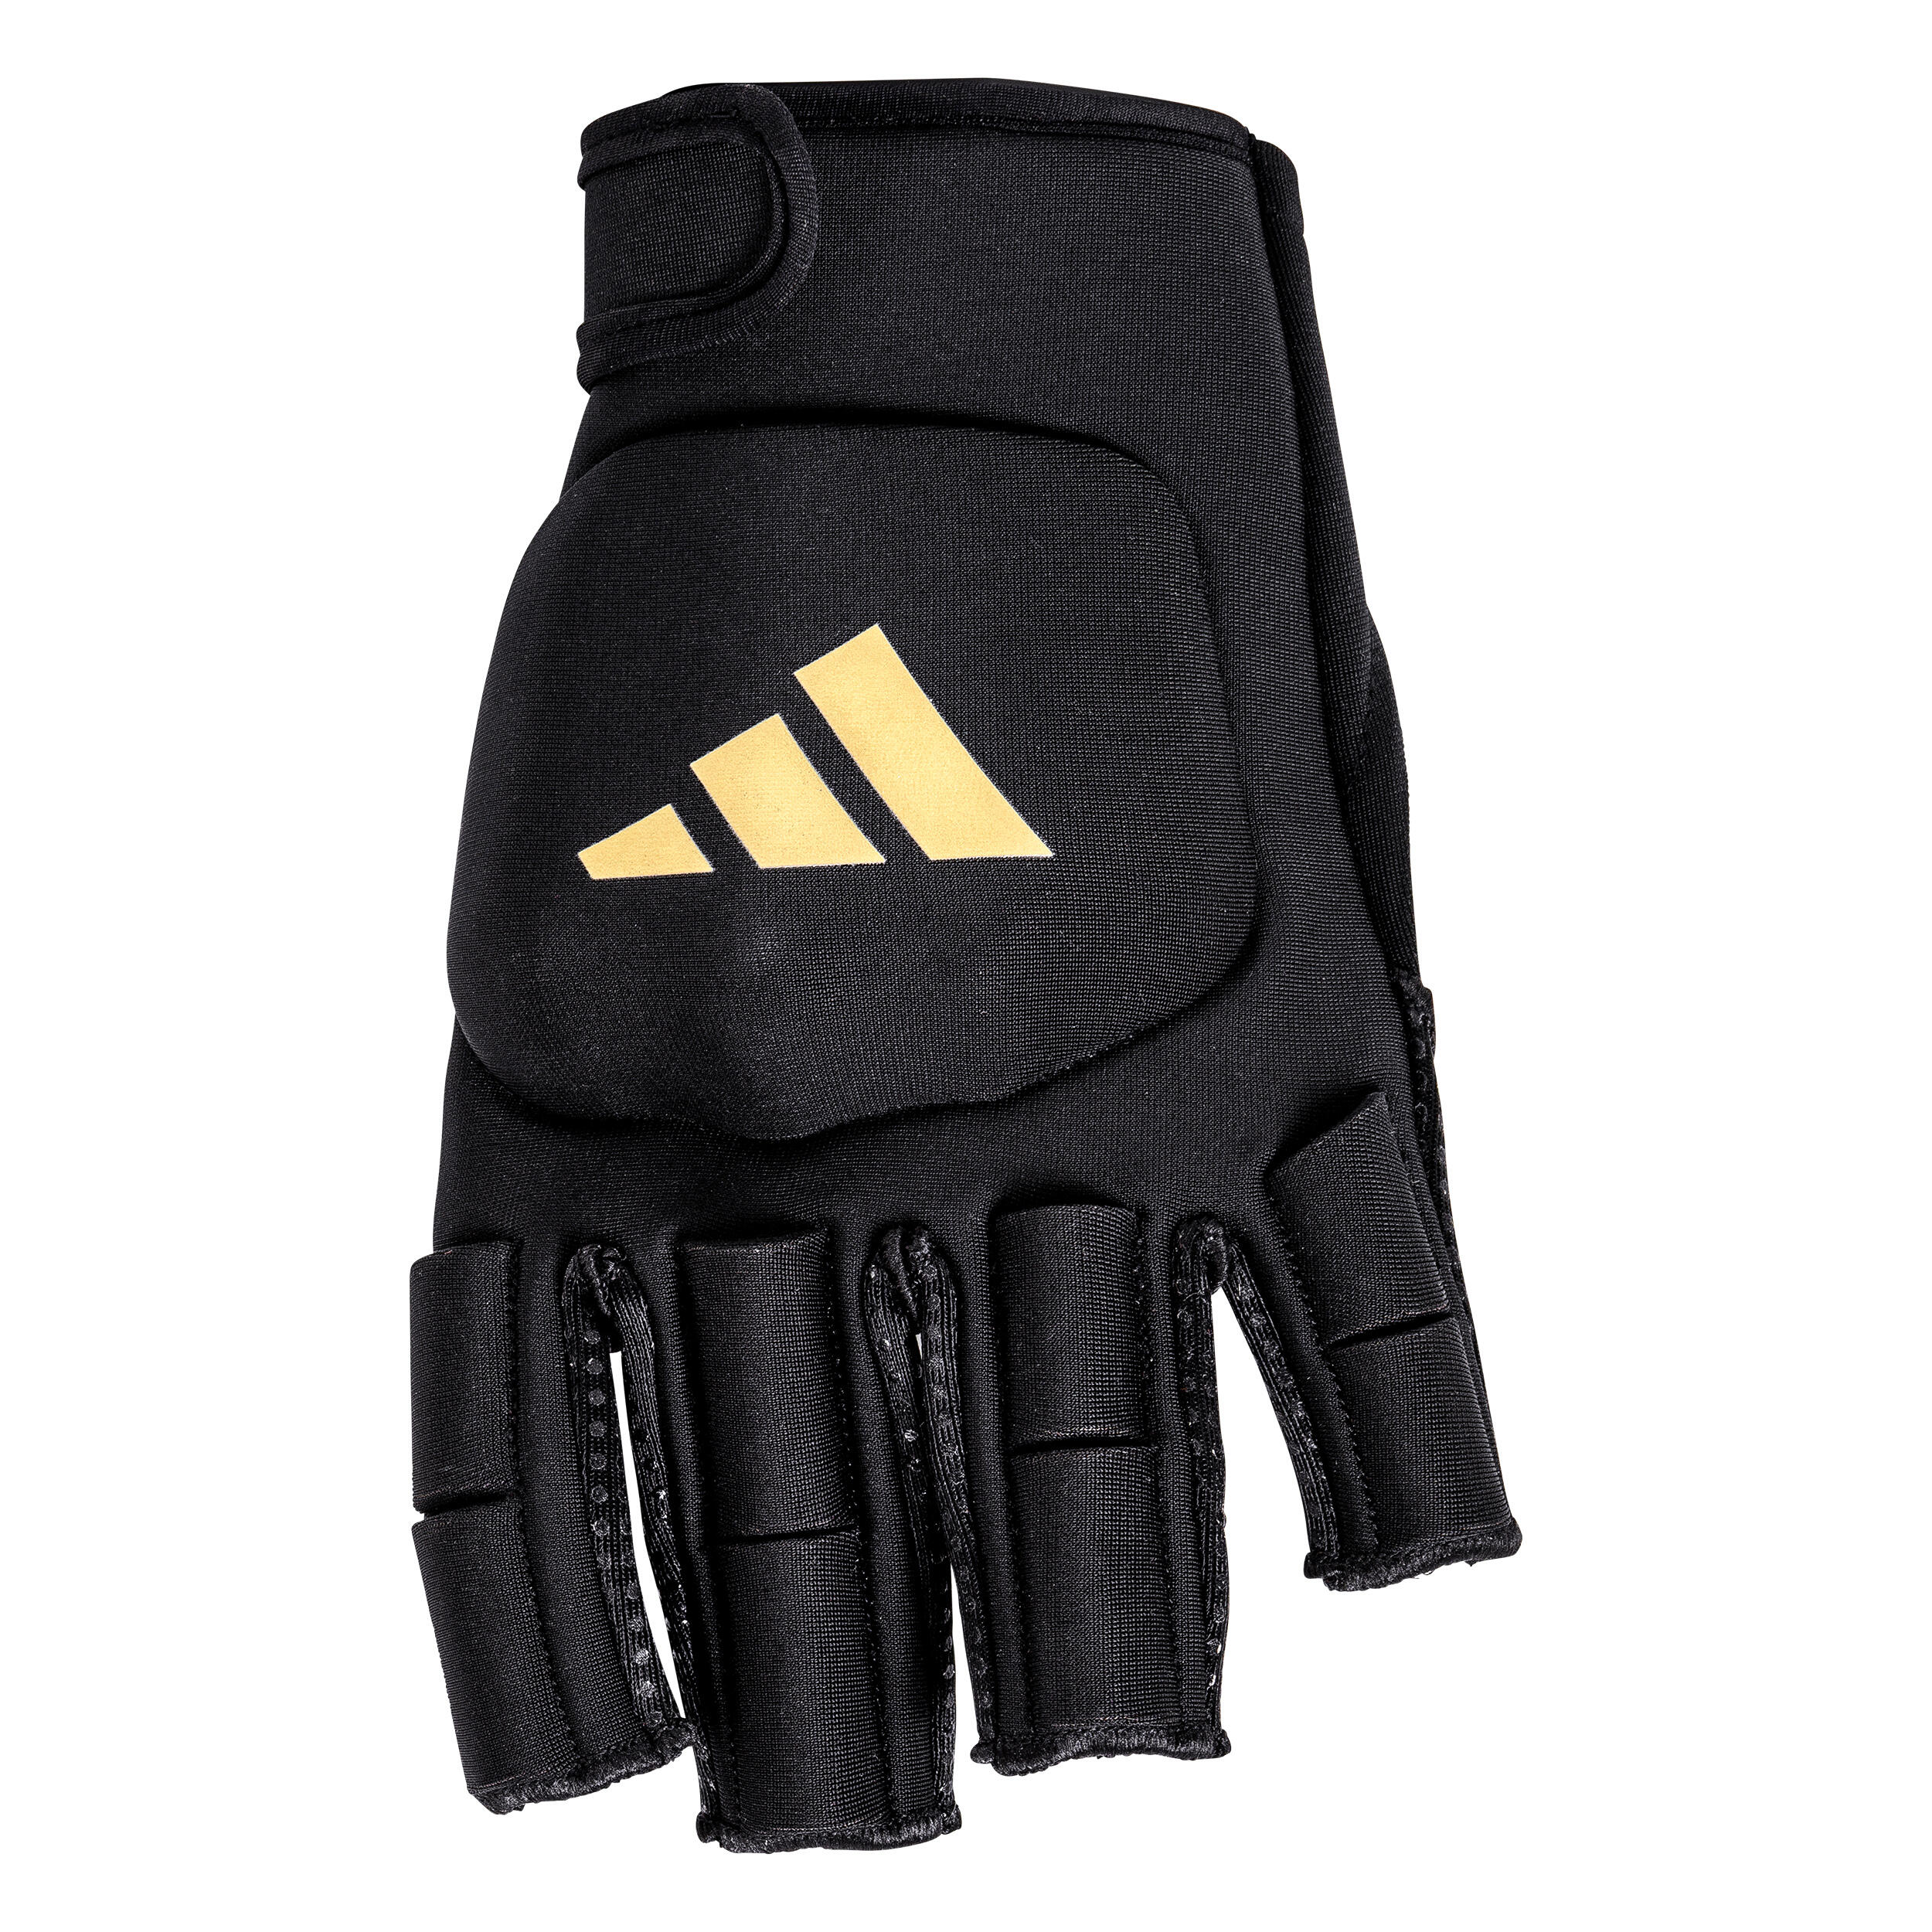 Teen/Adult Moderate/High Intensity Two-Knuckle Hockey Glove OD - Black/Orange 1/4